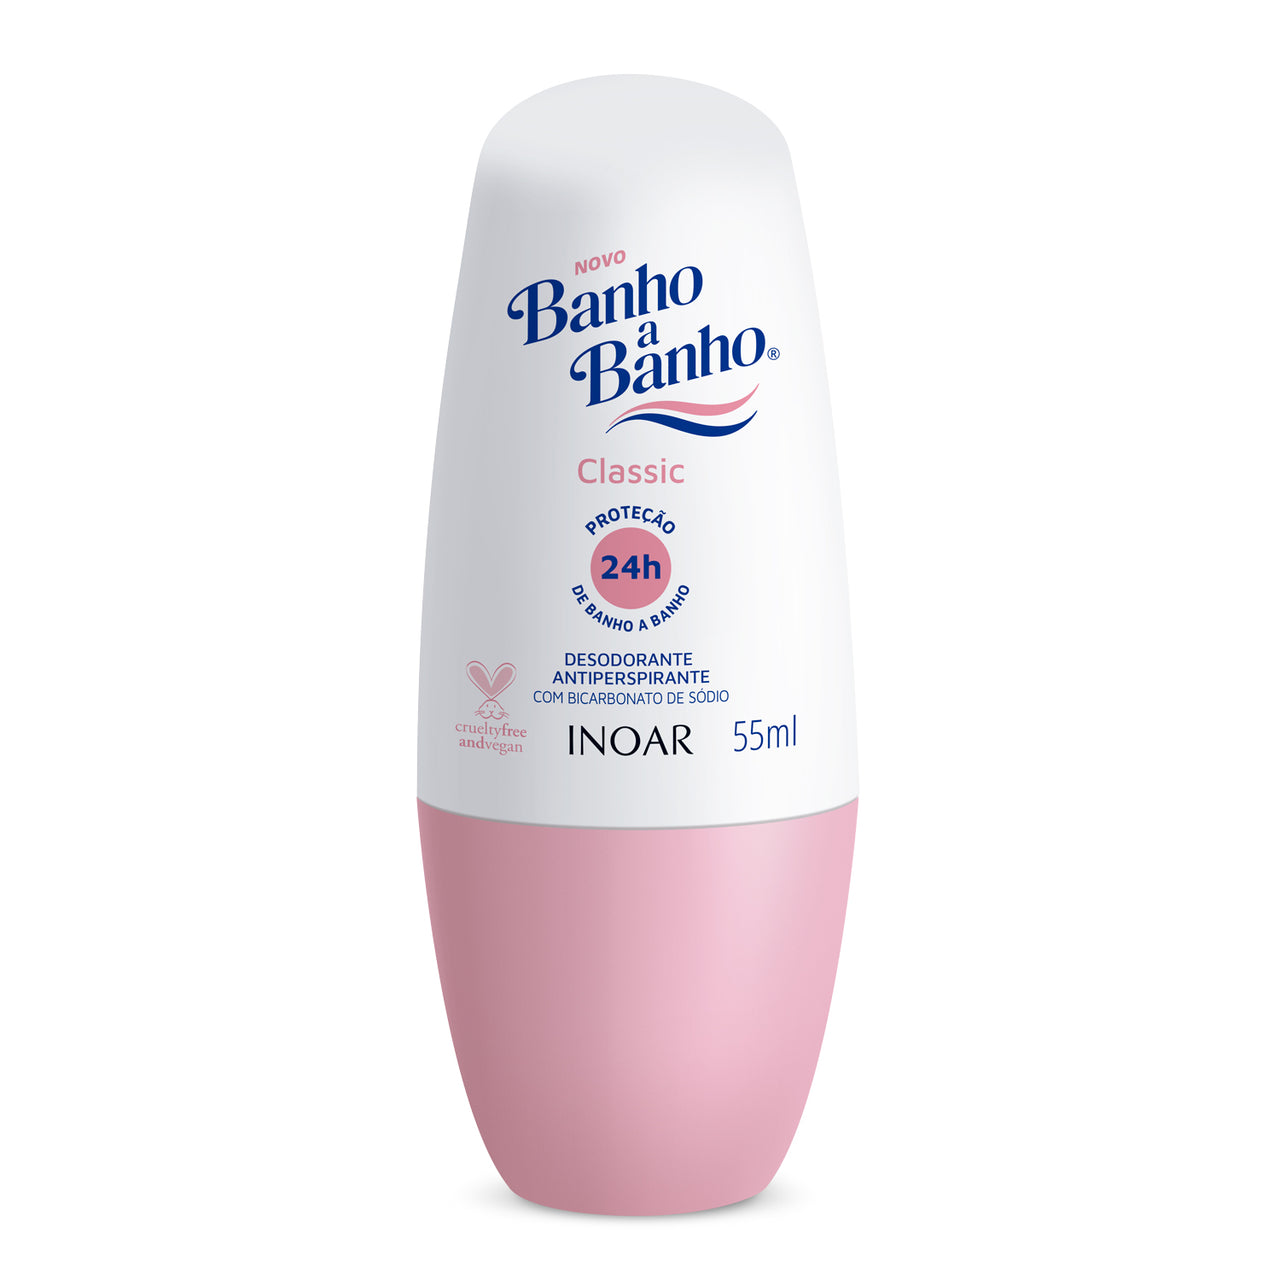 INOAR Banho a Banho Clasic - rutulinis dezodorantas 55 ml